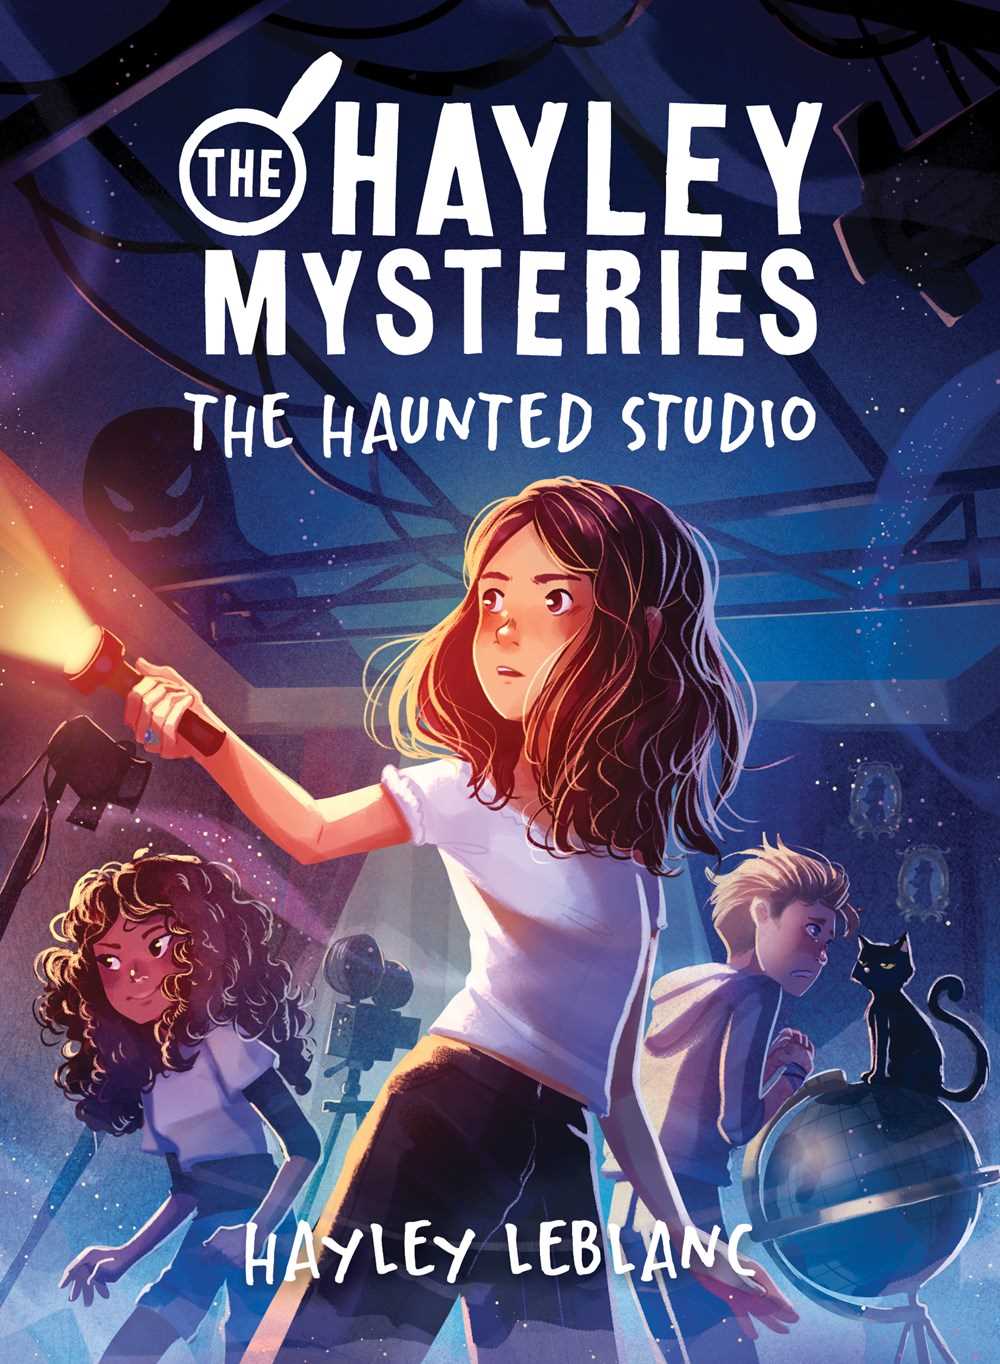 The Hayley Mysteries #01: The Haunted Studio